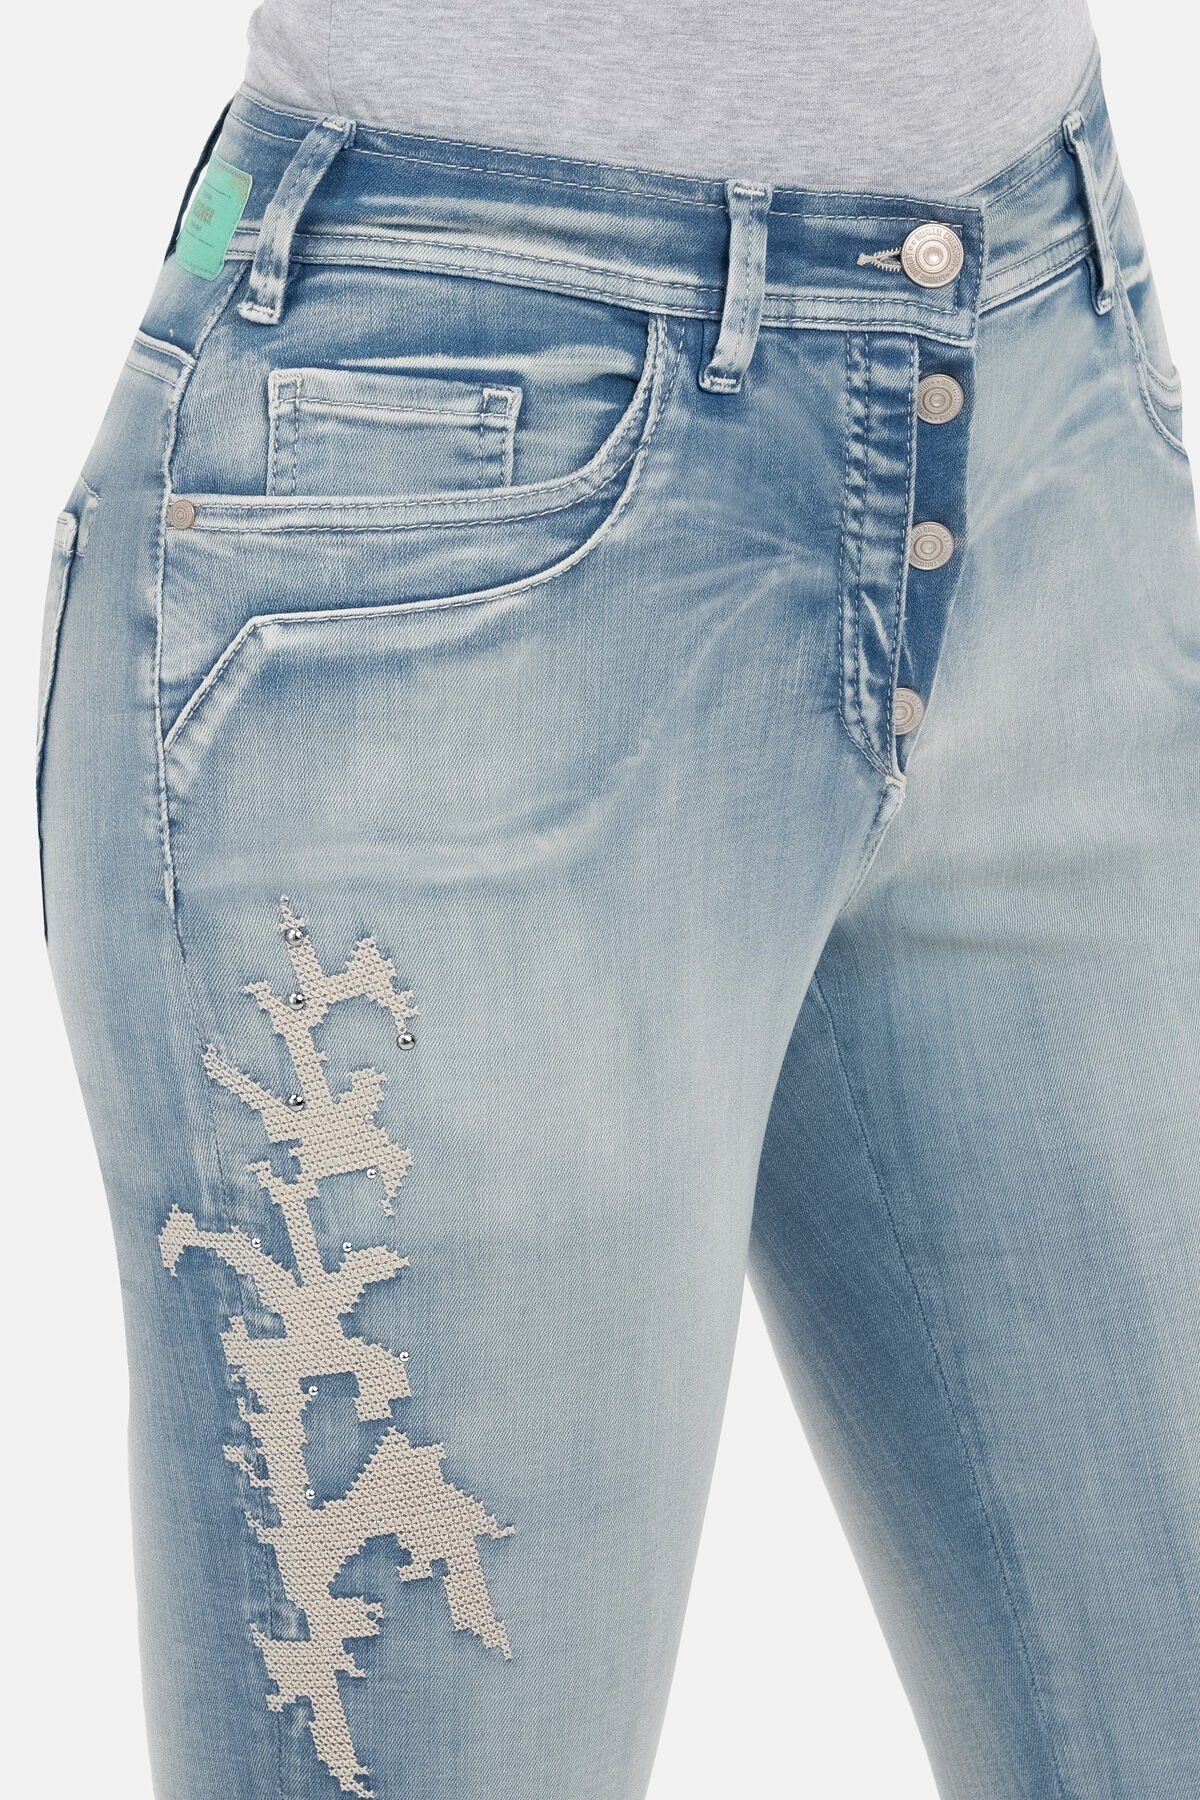 Jessi Stickereien Recover Pants mit Slim-fit-Jeans